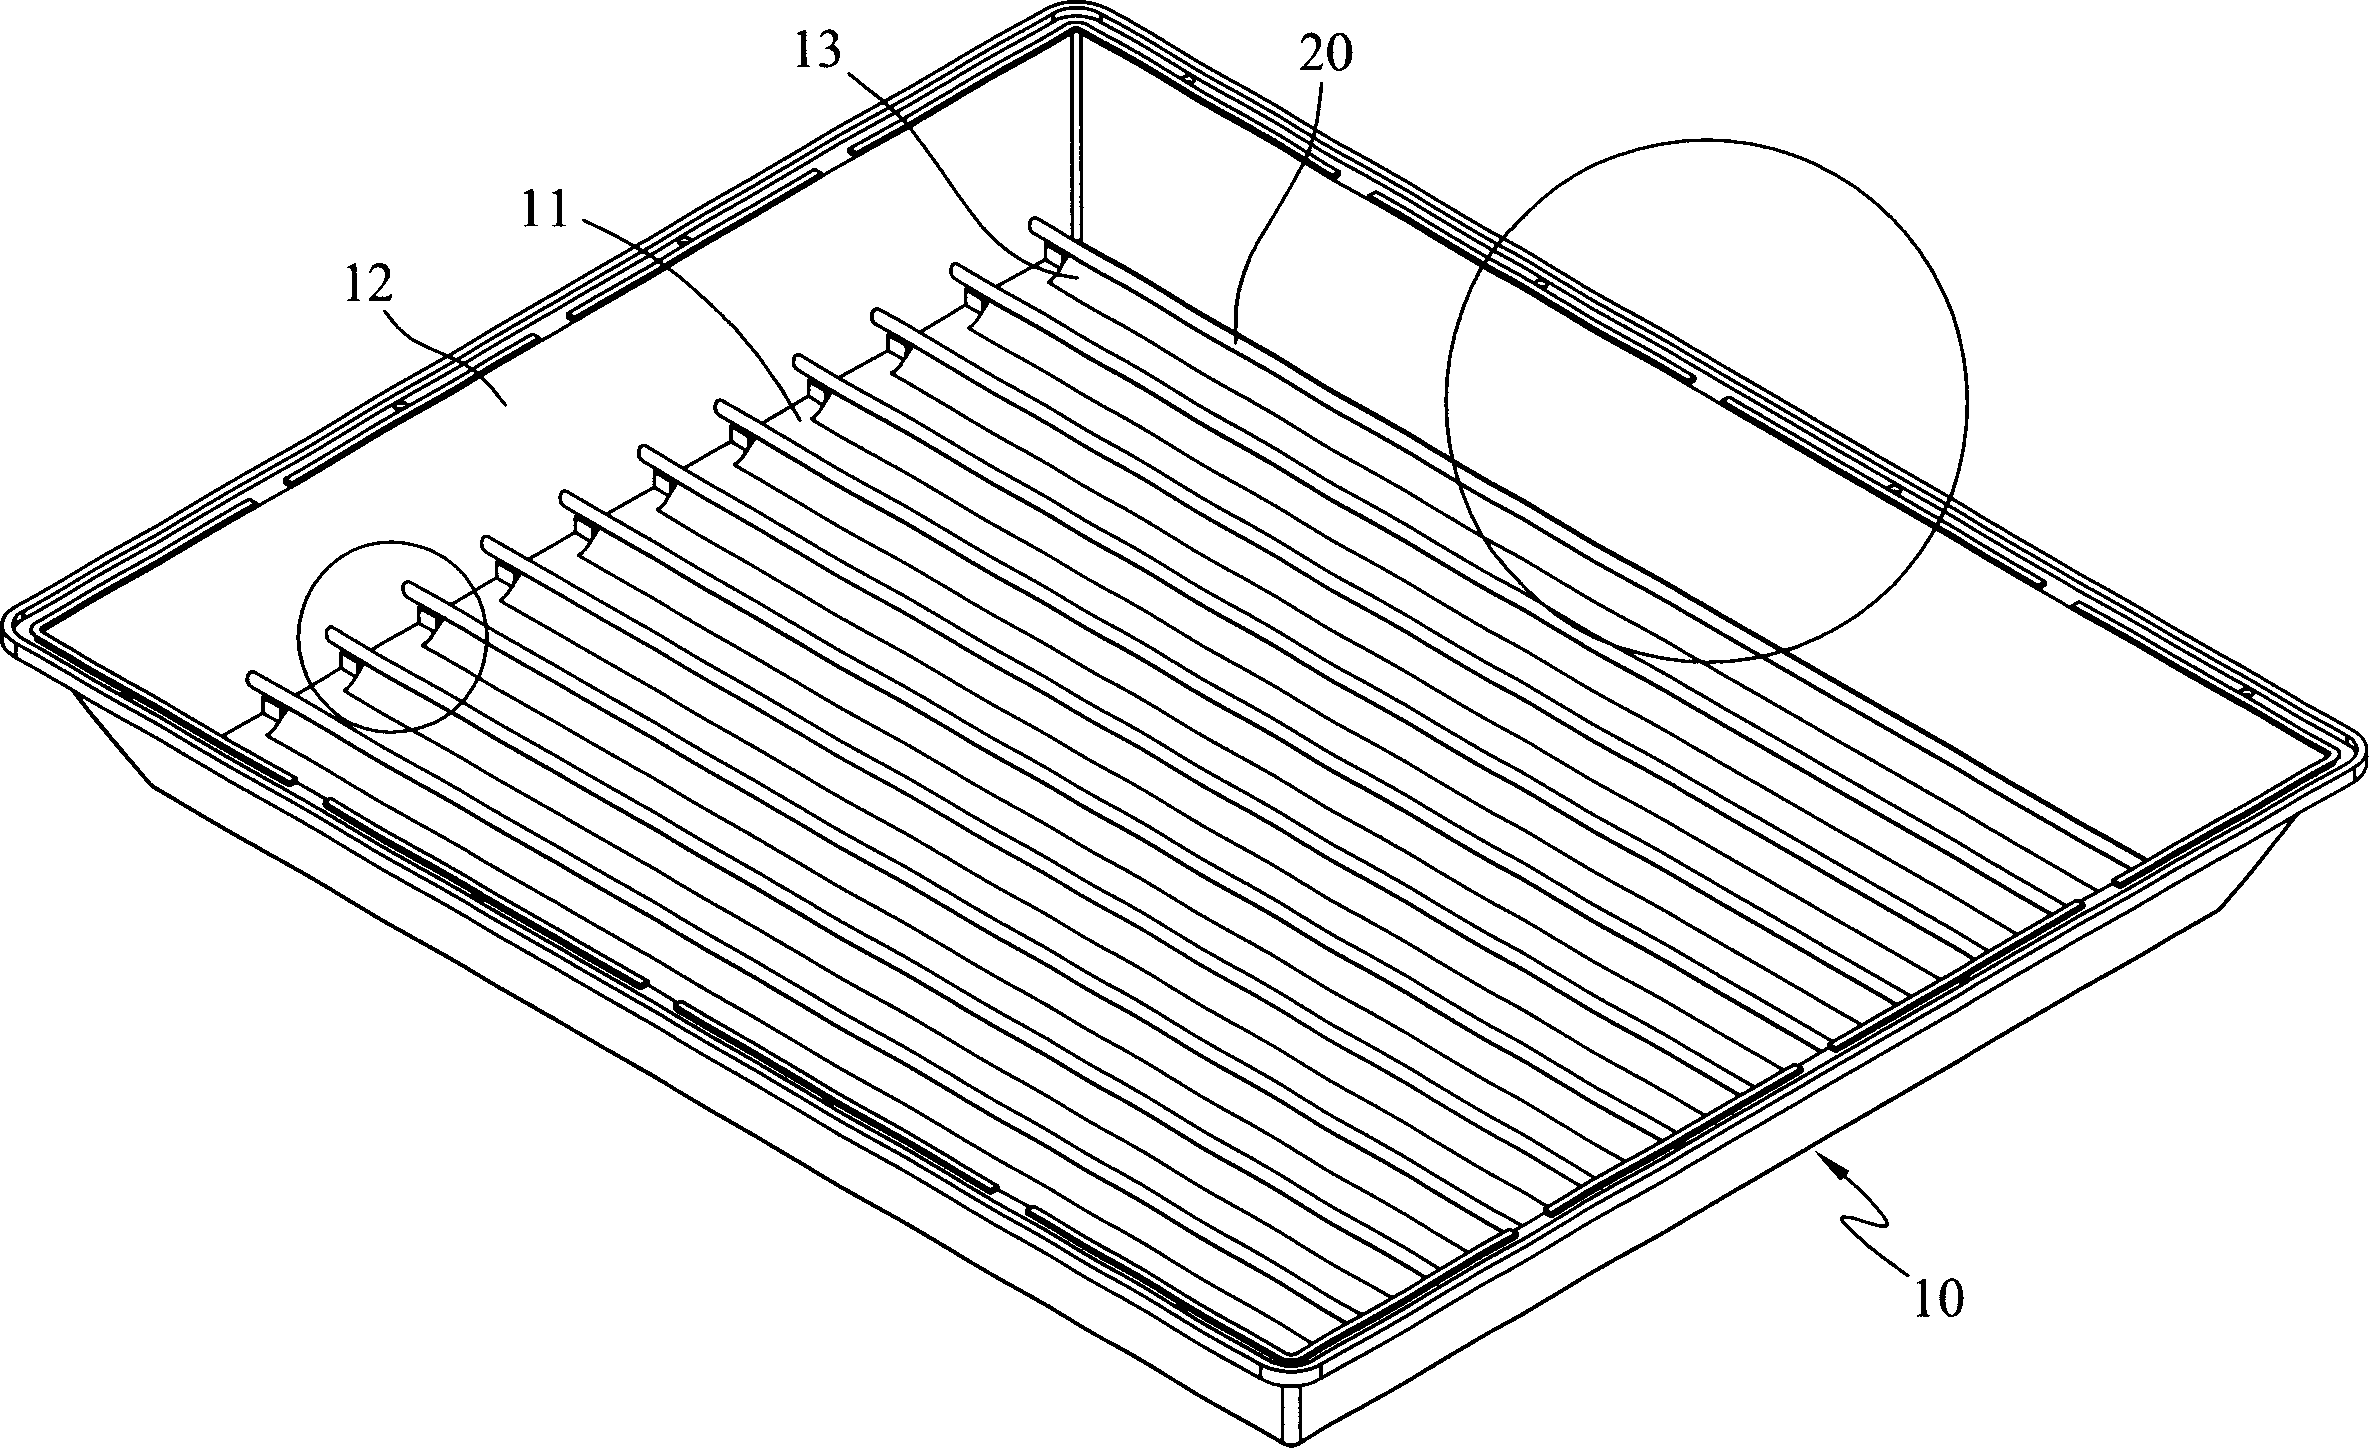 Heat radiation design of backlight module